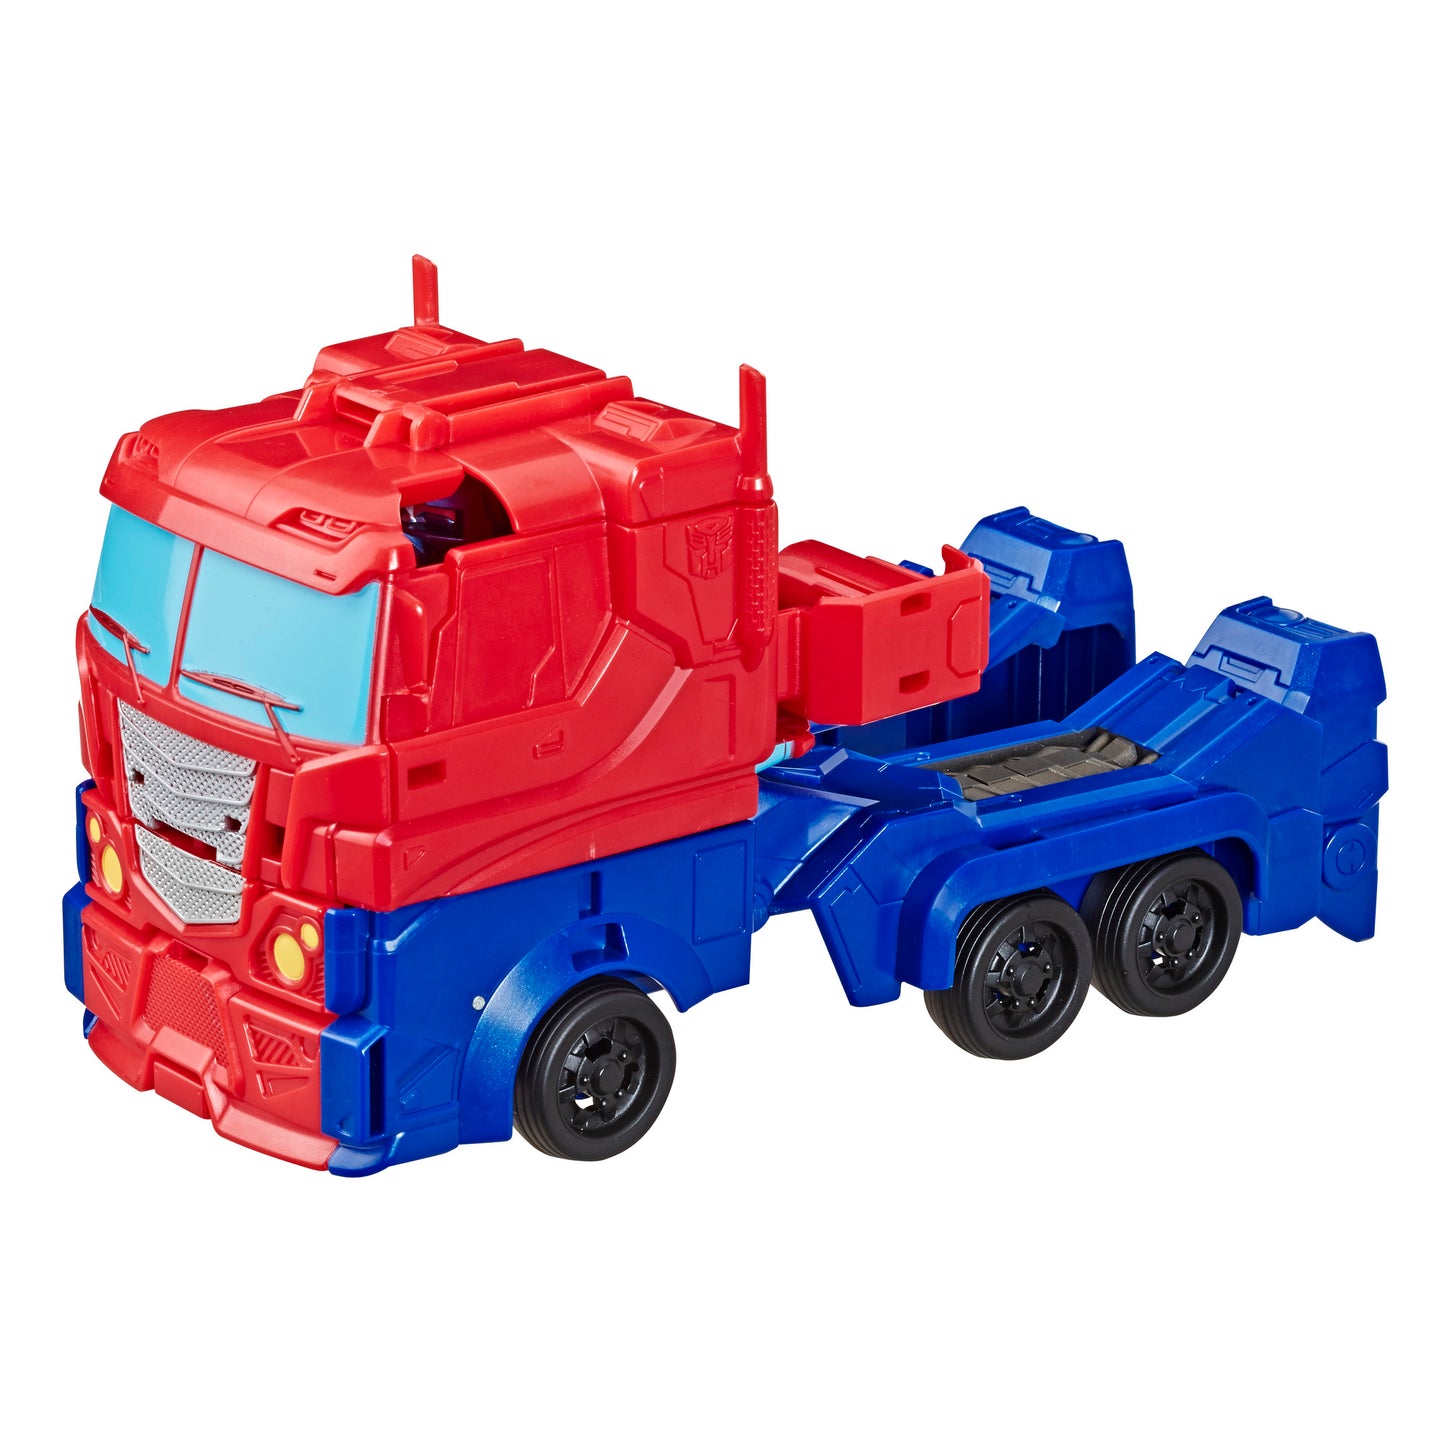 Transformers Toys Titan Changers Optimus Prime Action Figure